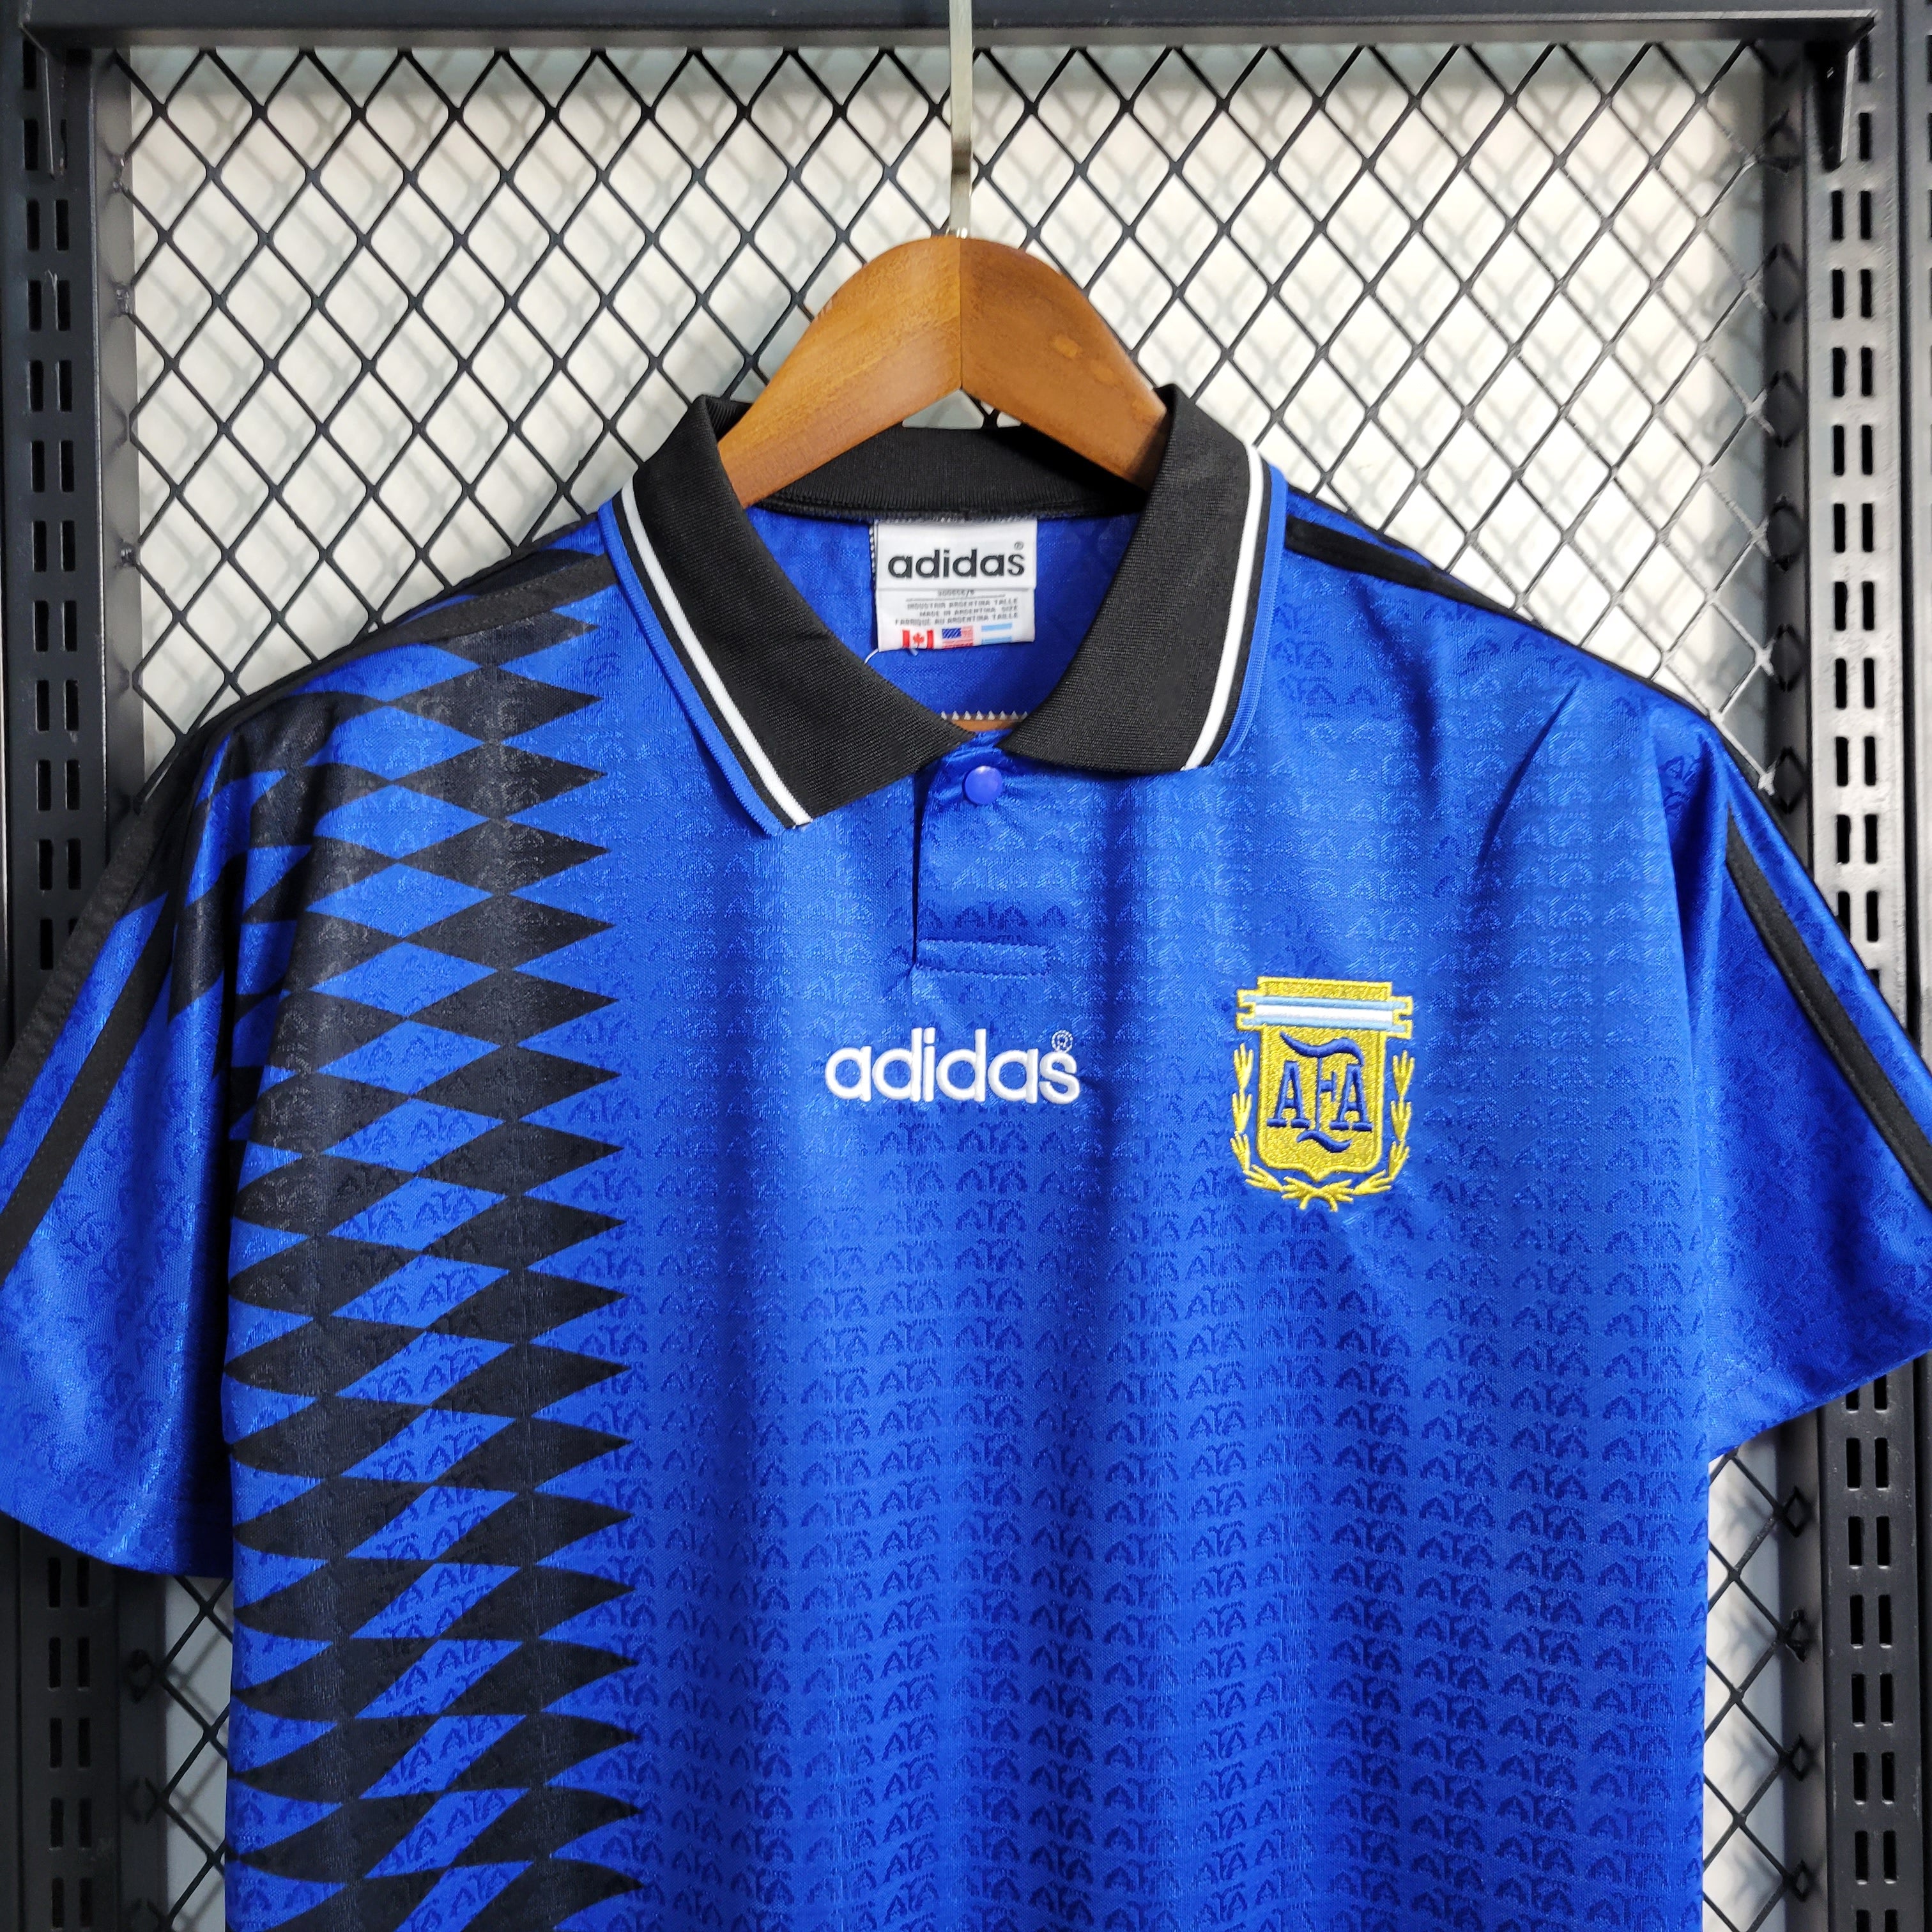 1994 Argentina Away Shirt - That Retro Shirt Store